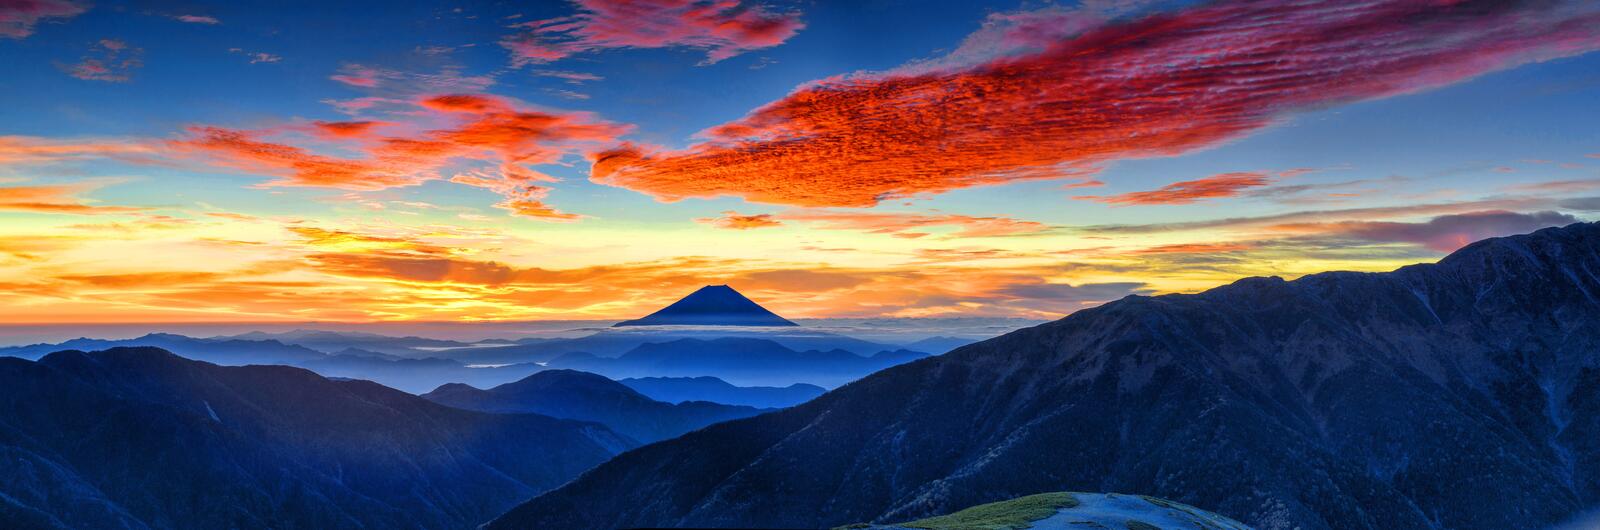 Wallpapers Mount Fuji Mountains Nature on the desktop